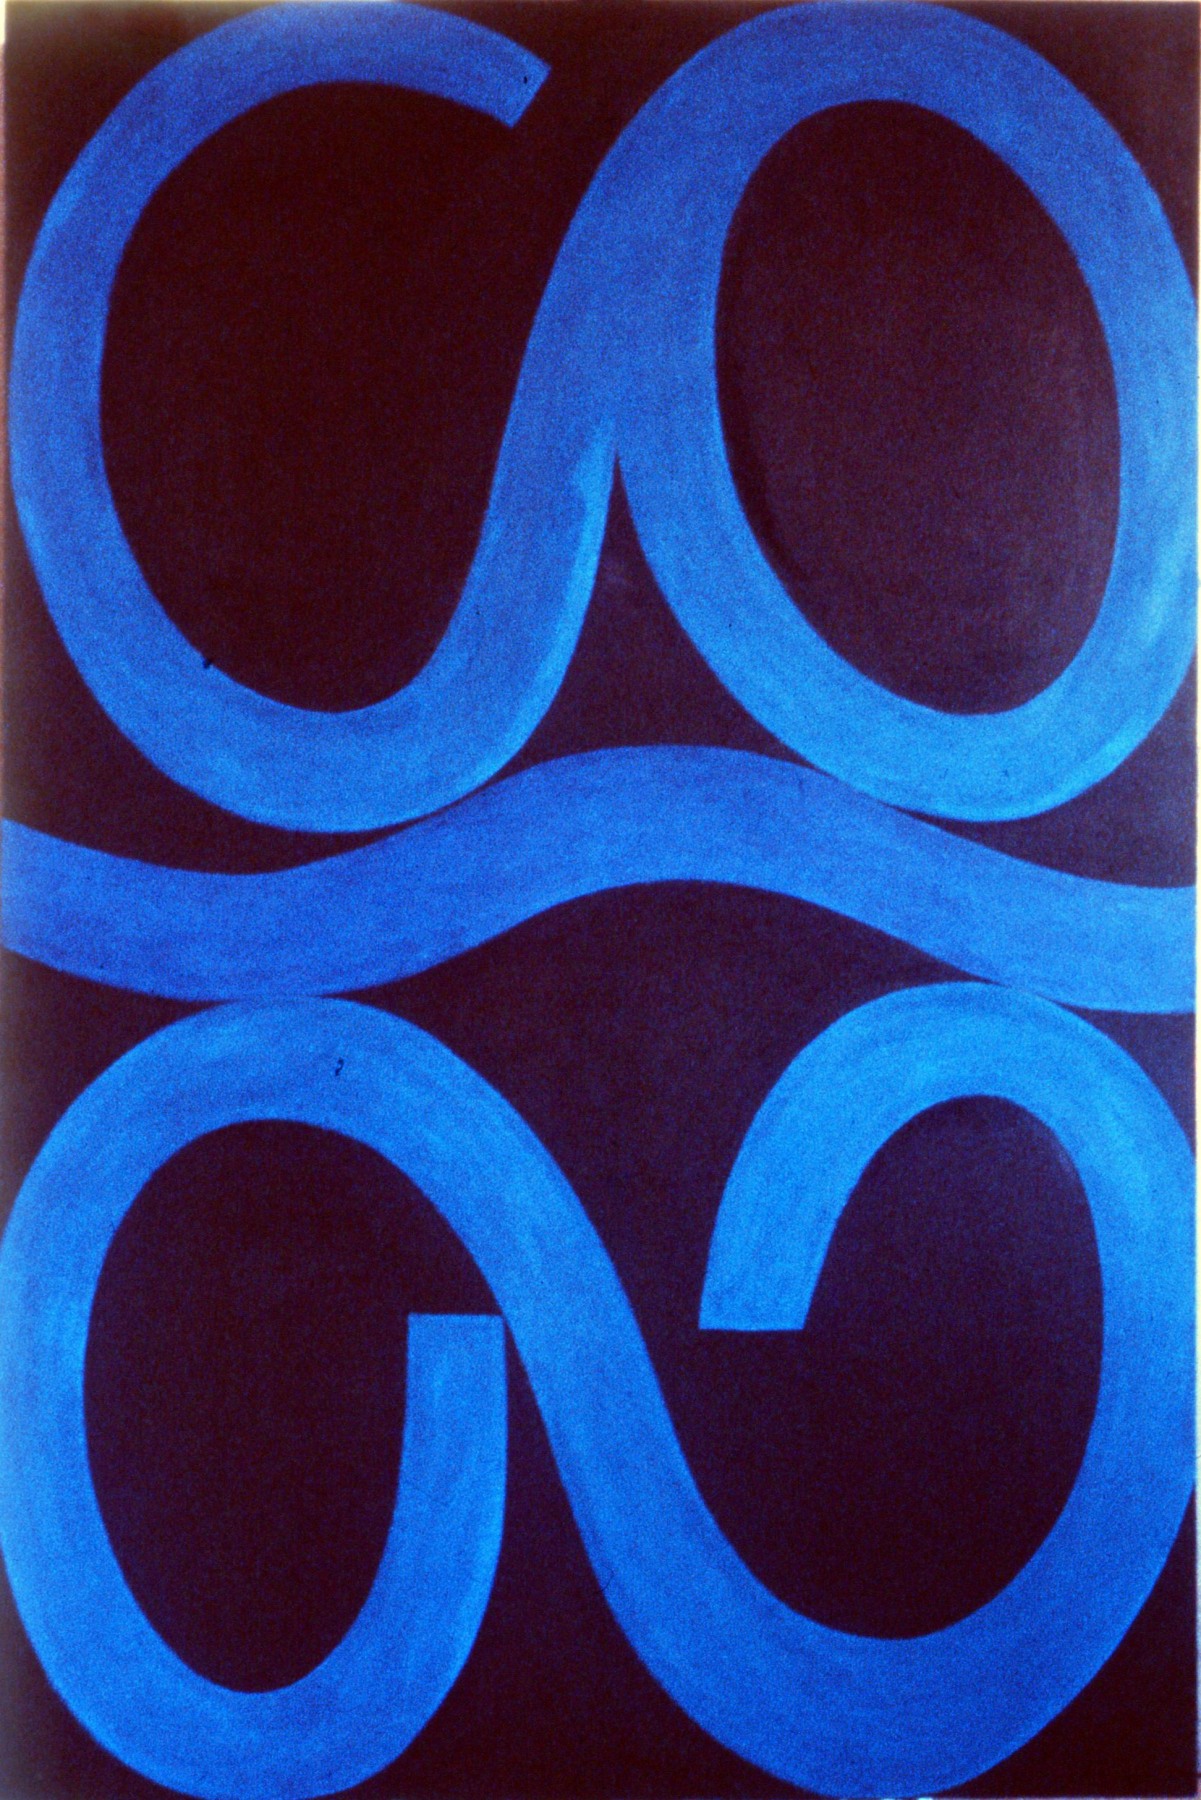 Fritz Bultman, Three Waves, 1975